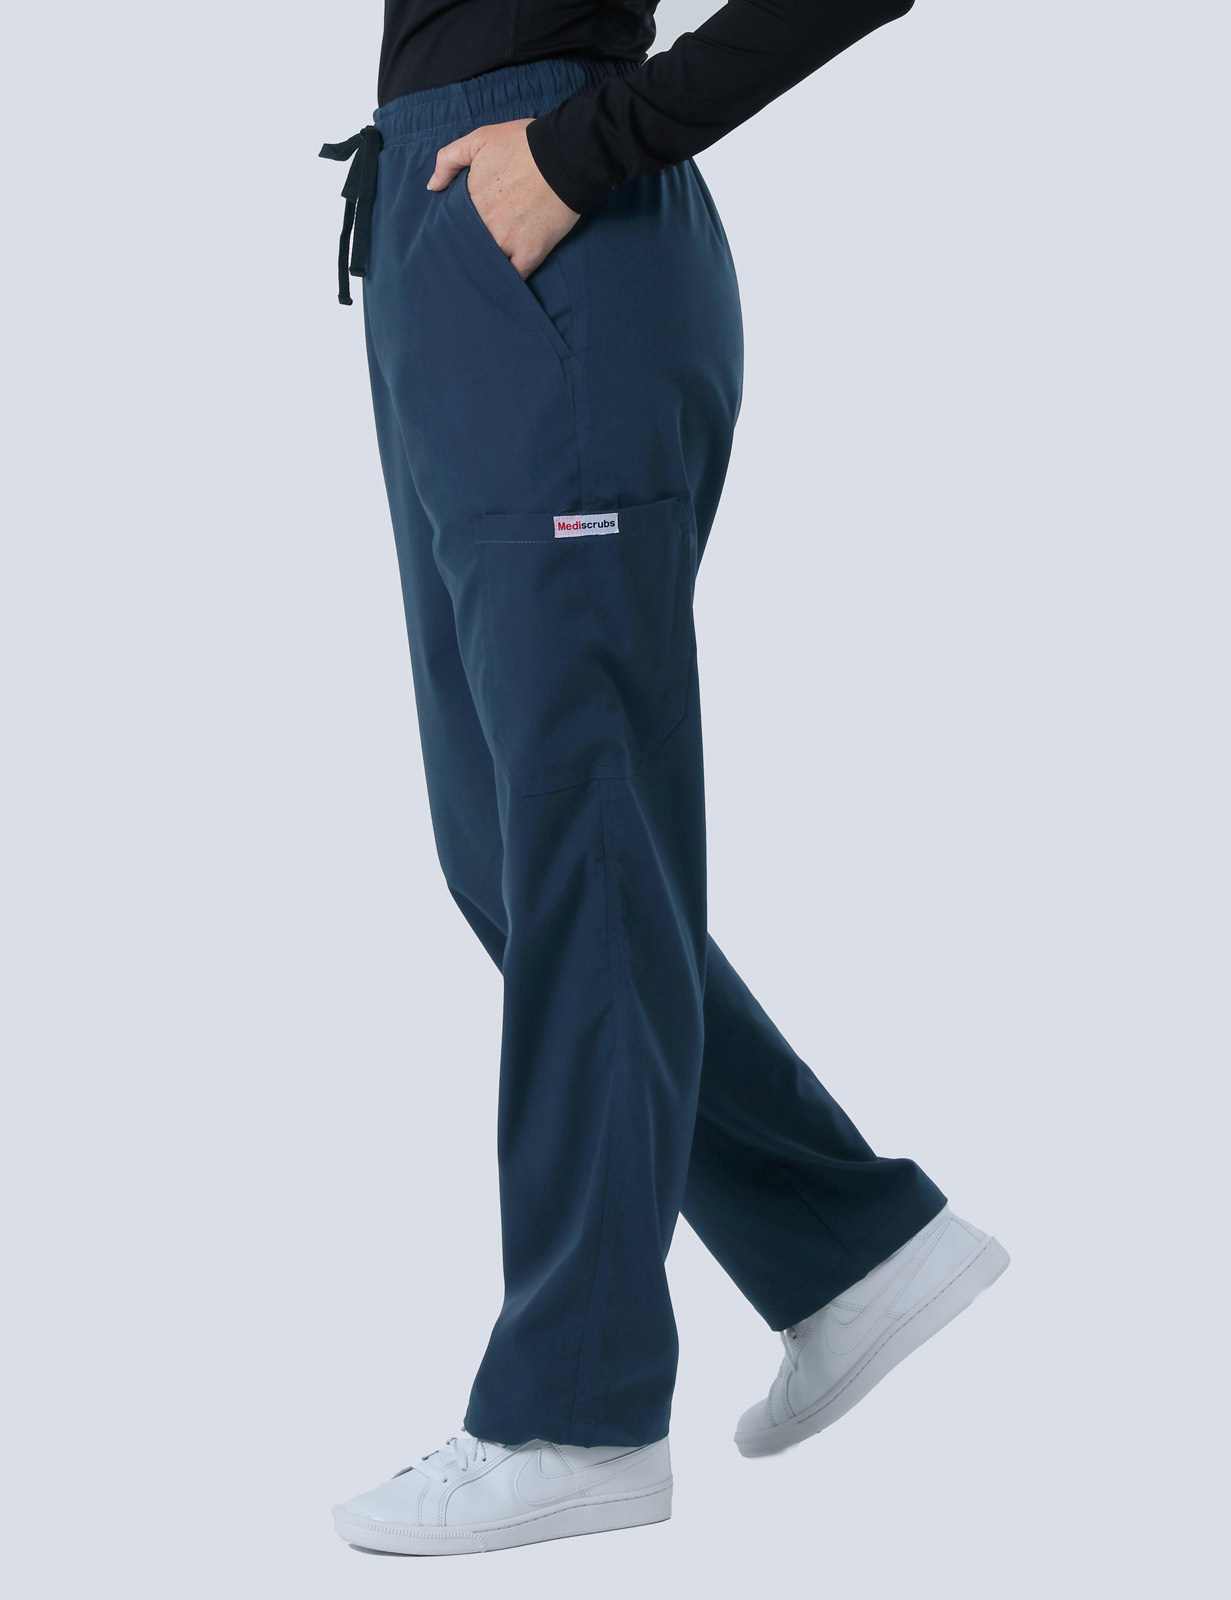 Prince Charles Hospital Cardiac Scientist Unit Uniform Set Bundle (4 Pocket Top and Cargo Pants in Navy + Logos)